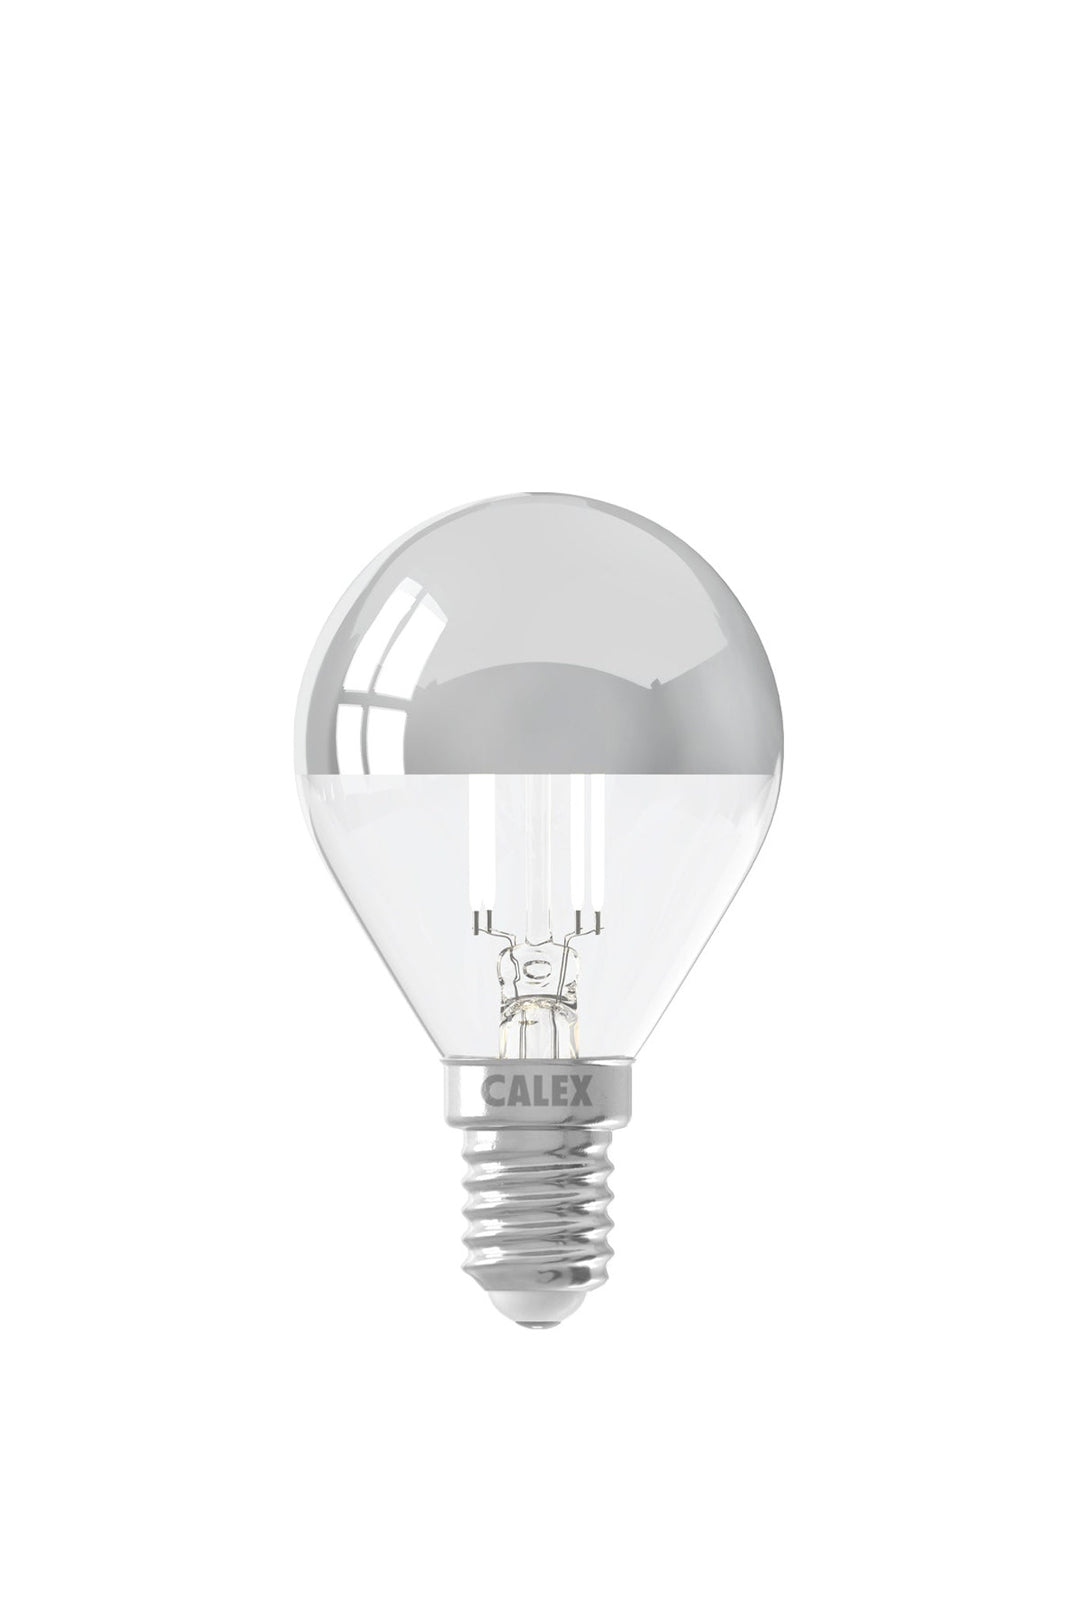 Calex LED Warm Filament Top-Mirror Ball Lamp P45, Chrome, E14, Dimmable 1101001000